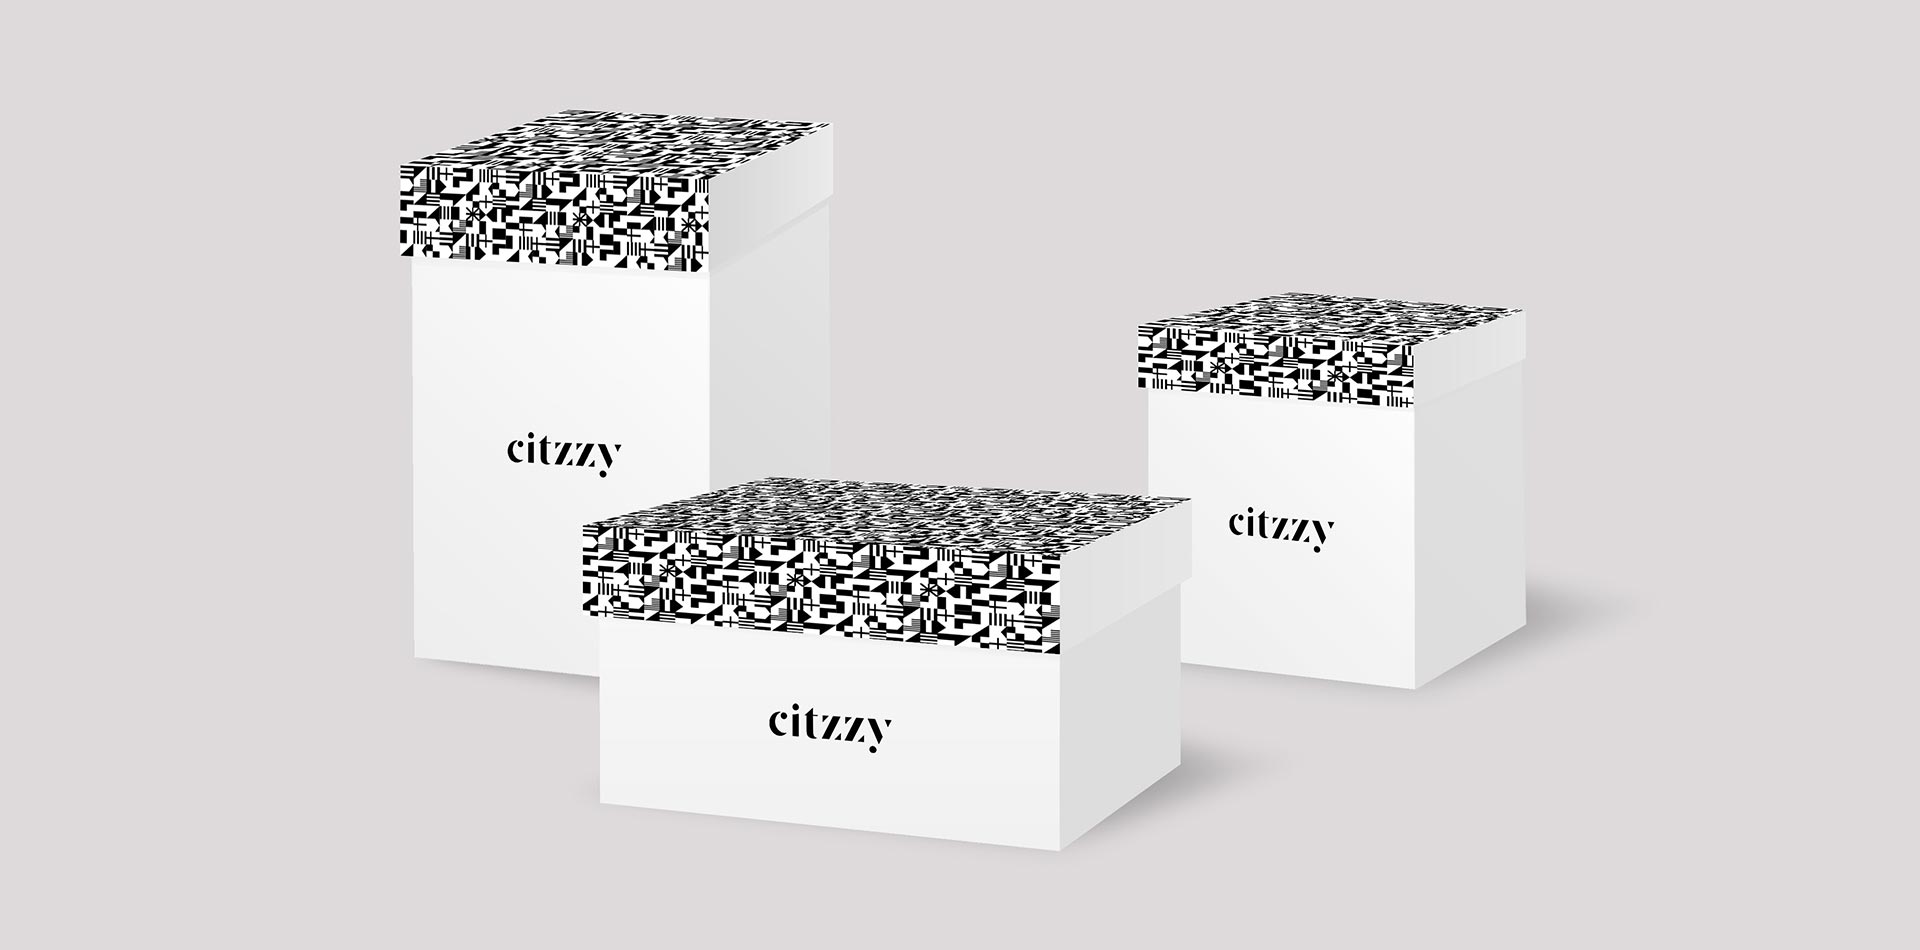 Citzzy by Barceló estudio - Creative Work - $i